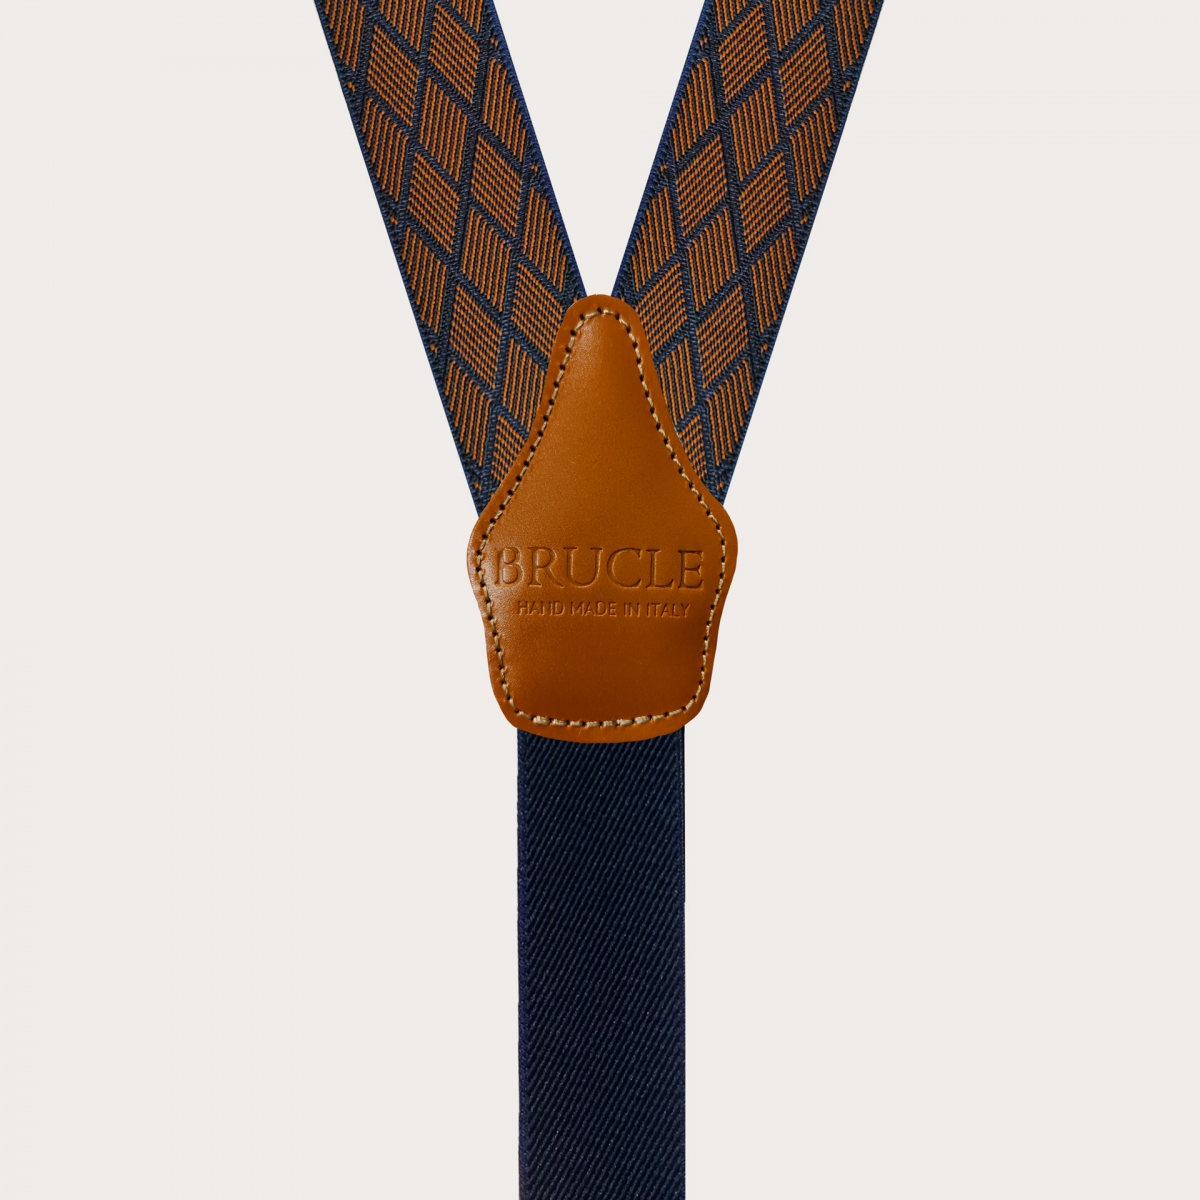 Bretelle uomo eleganti elastiche doppio uso jacquard blu e arancio motivo rombi